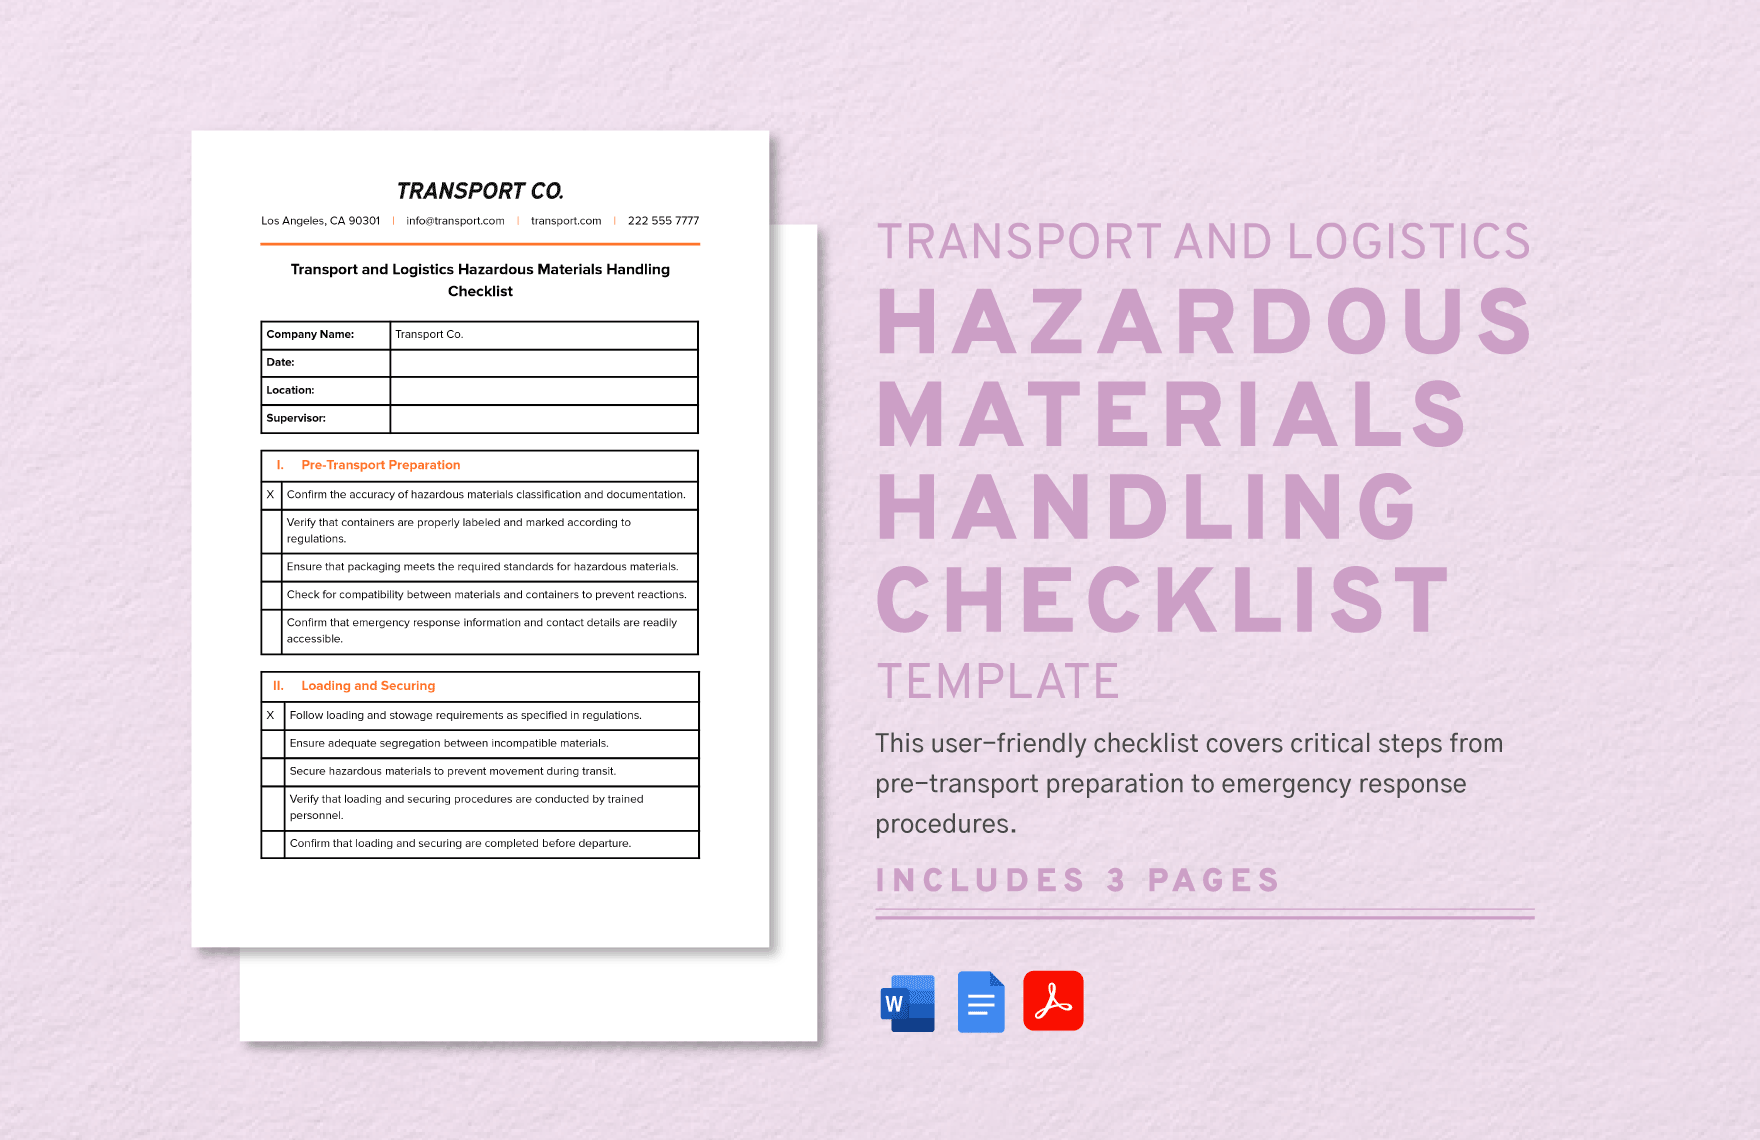 Transport and Logistics Hazardous Materials Handling Checklist Template	